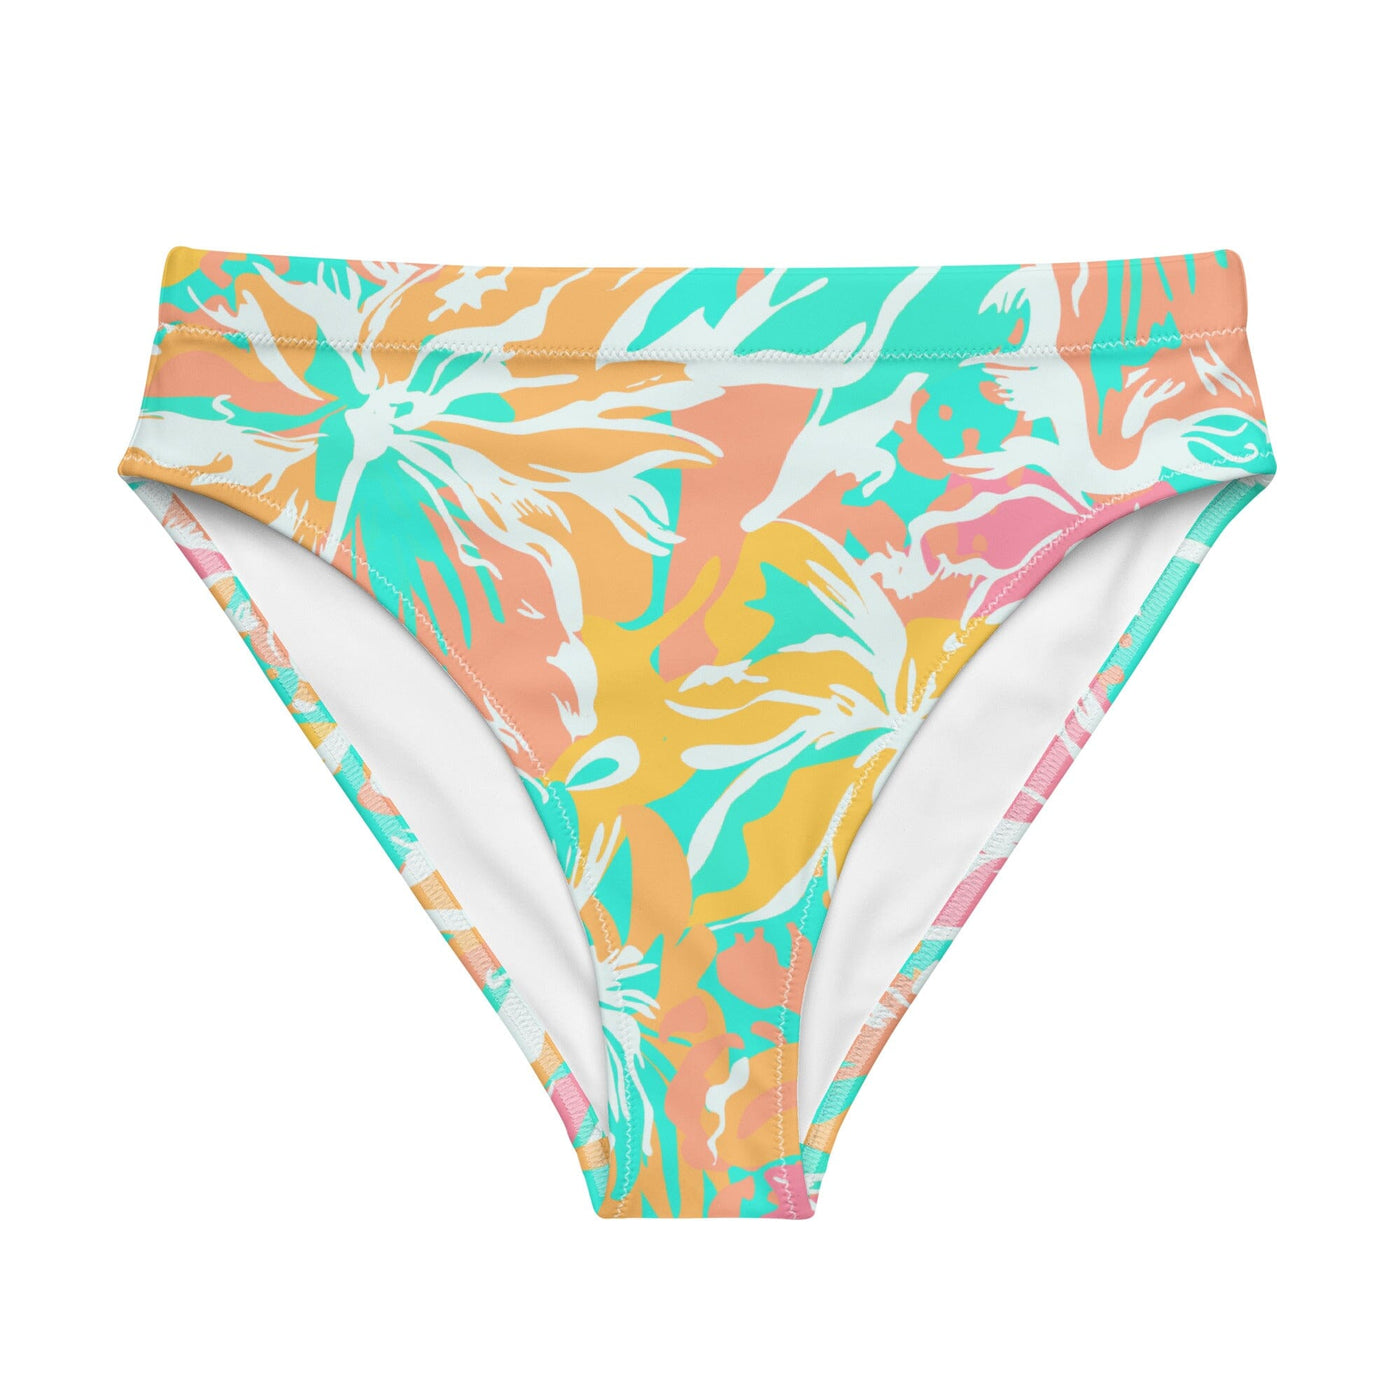 Bora Bora Bikini Bottom - Coastal Cool - Swimwear and Beachwear - Recycled fabrics